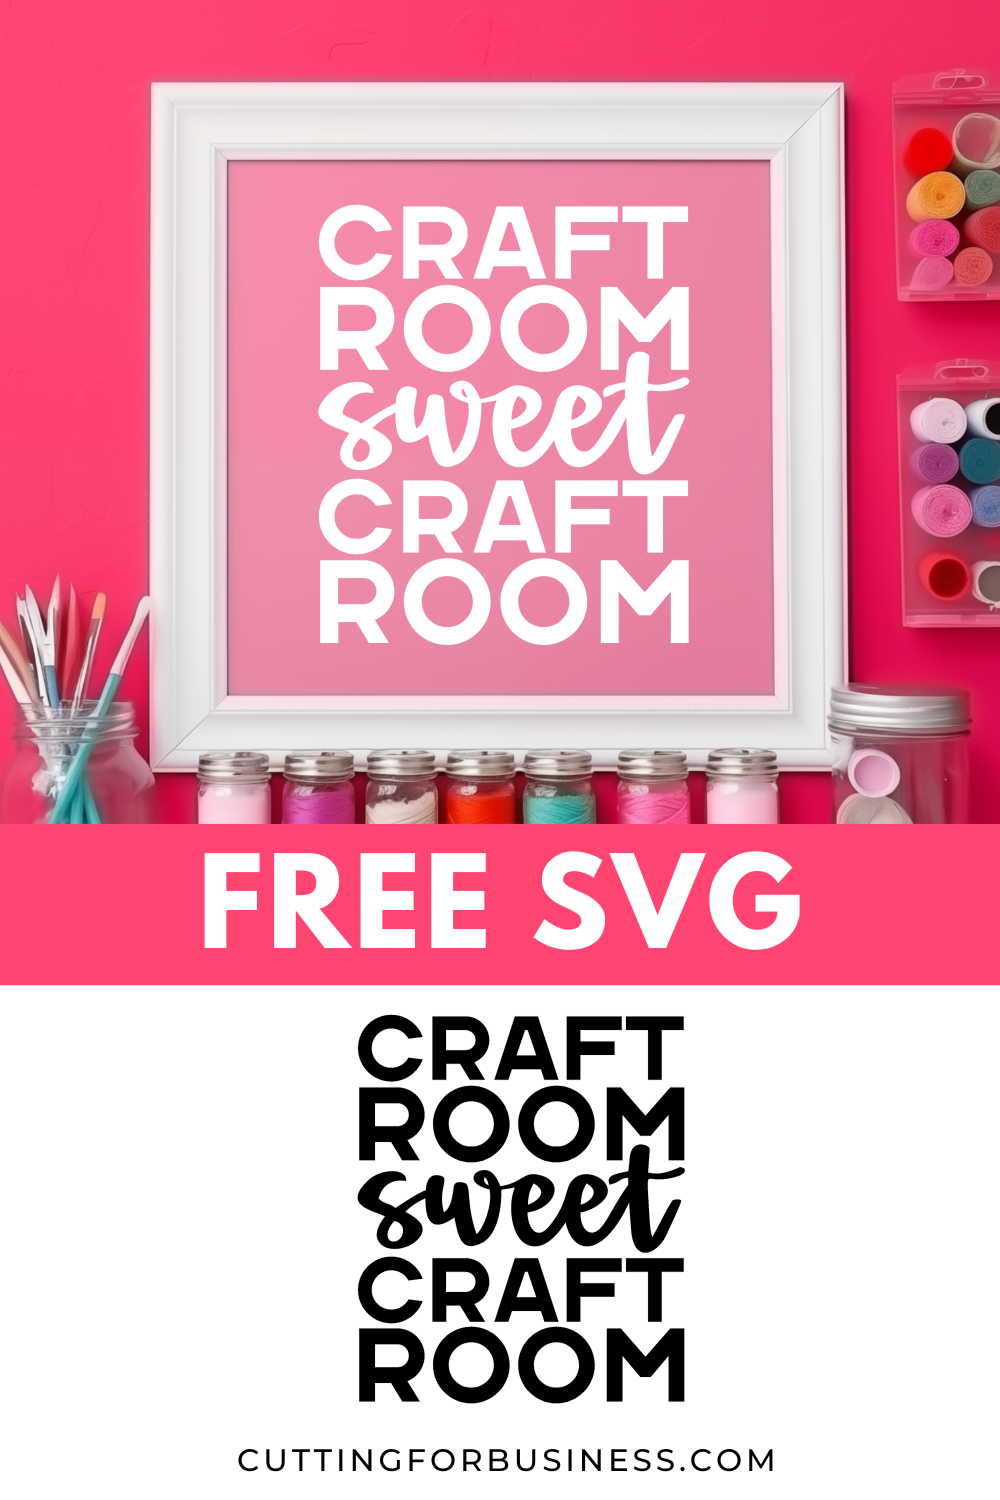 Free SVG Craft Room Sweet Craft Room - cuttingforbusiness.com